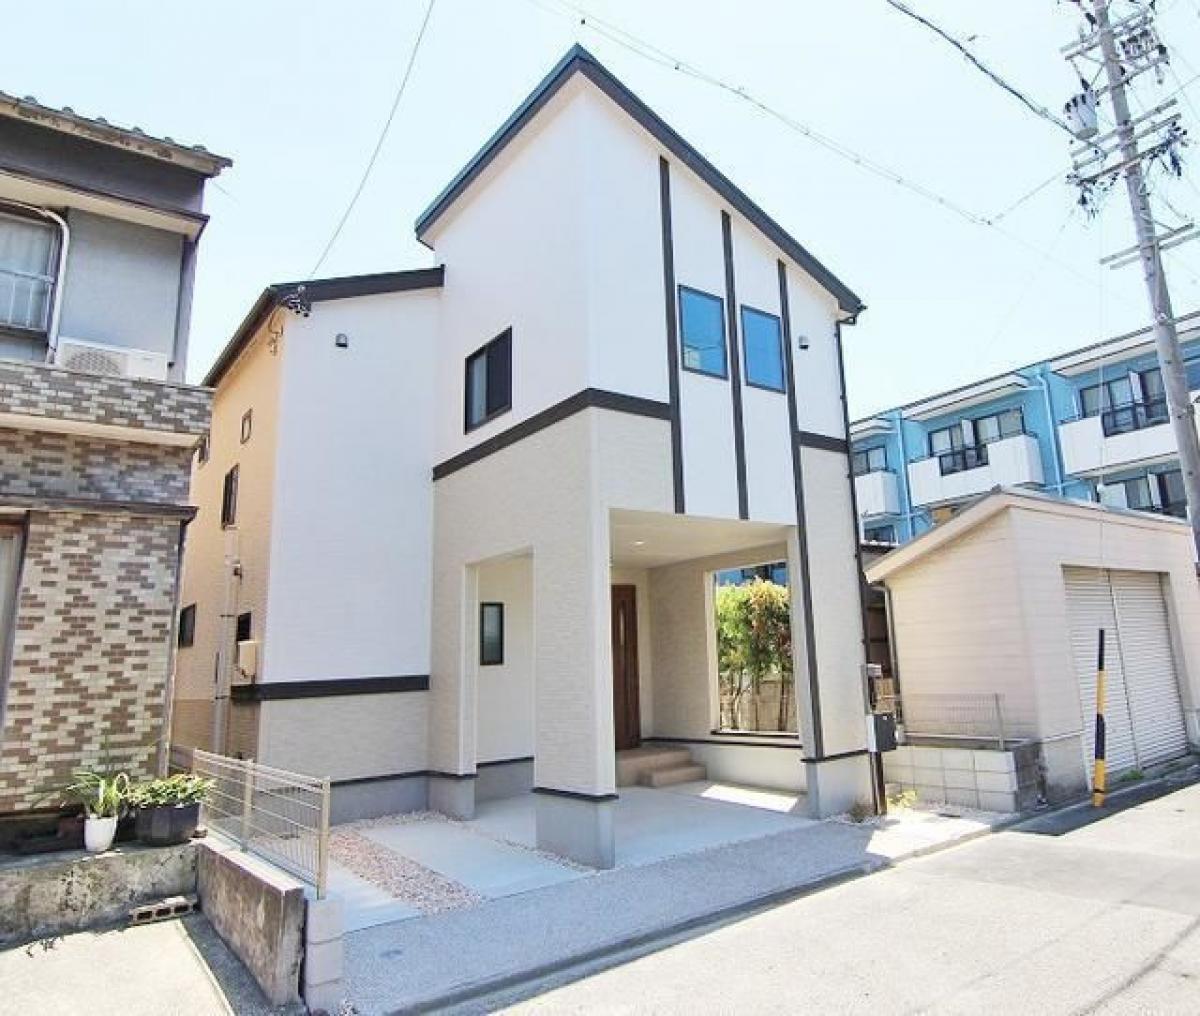 Picture of Home For Sale in Nagoya Shi Minami Ku, Aichi, Japan